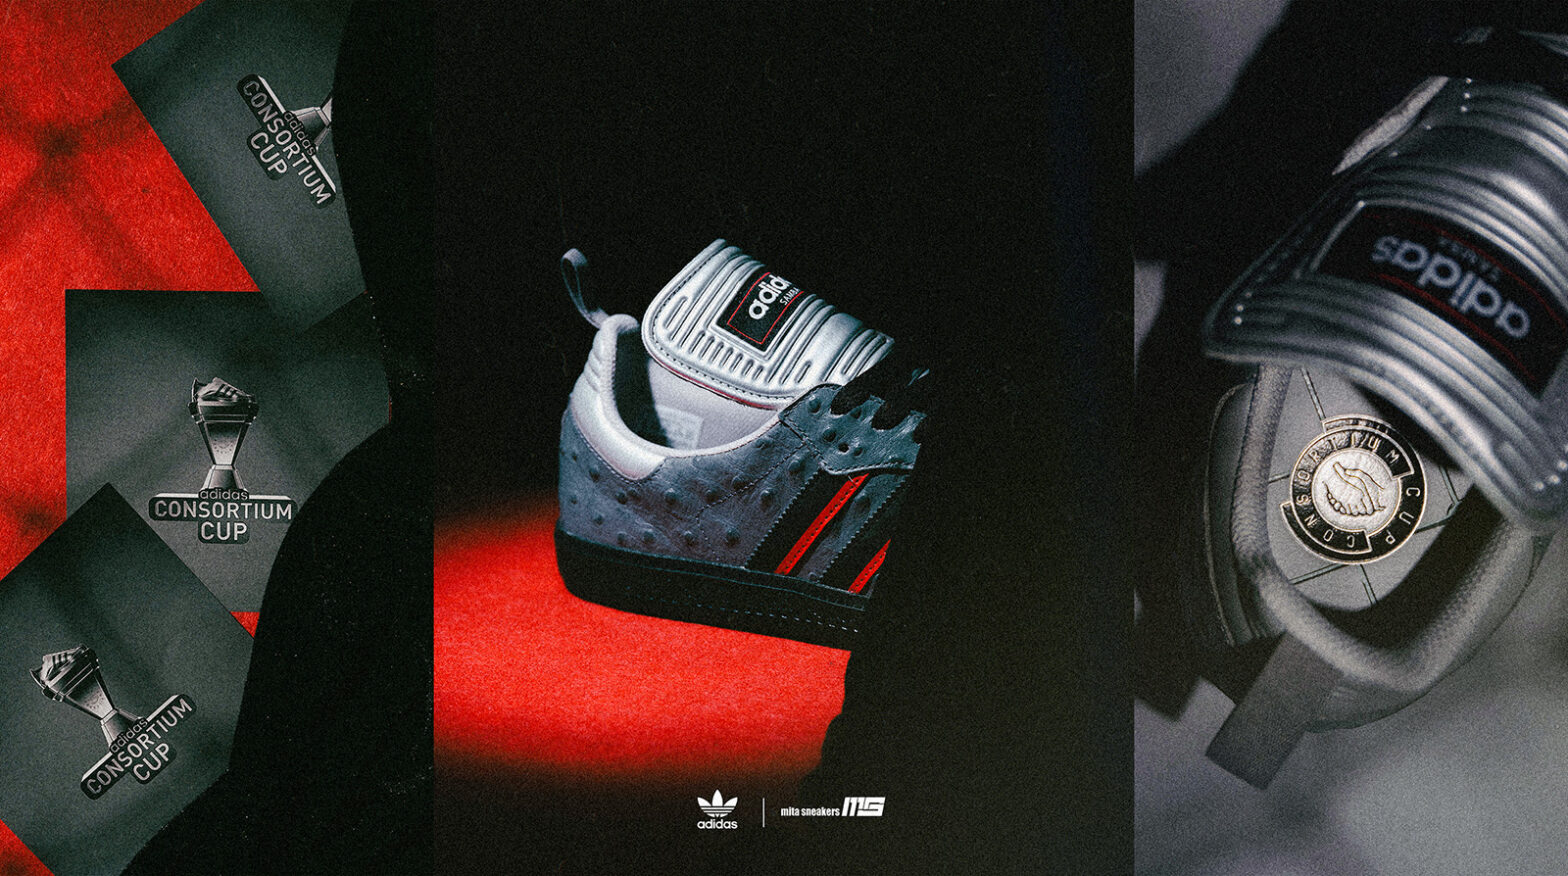 adidas SAMBA MITA “ASK” “mita sneakers” | mita sneakers Draw